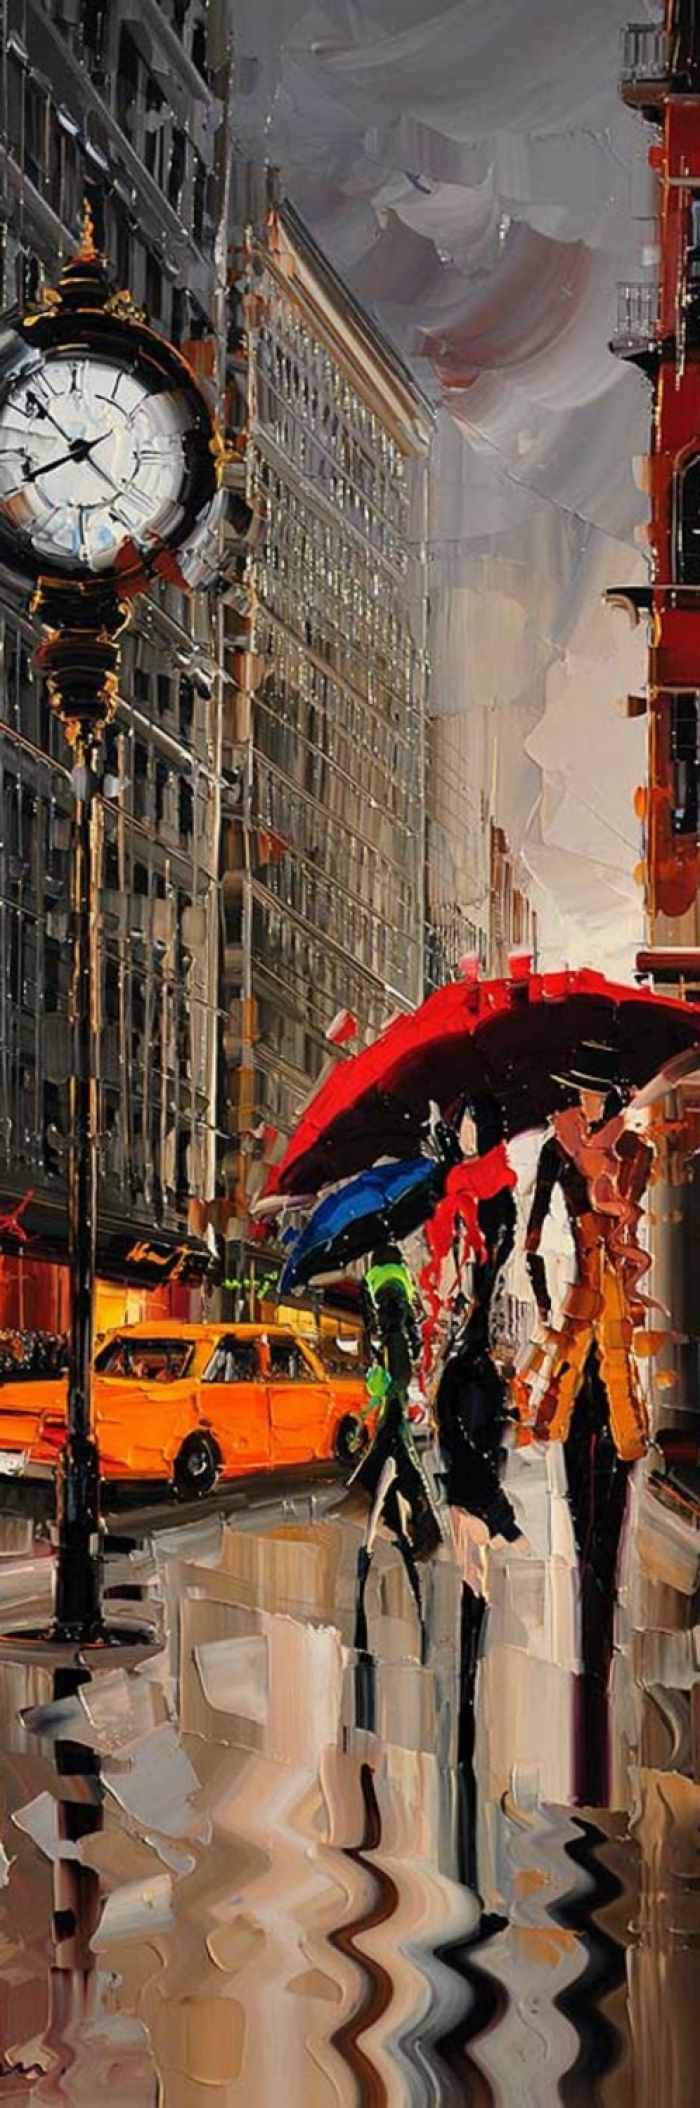 Kal Gajoum 当代油画作品 -  《红雨伞》